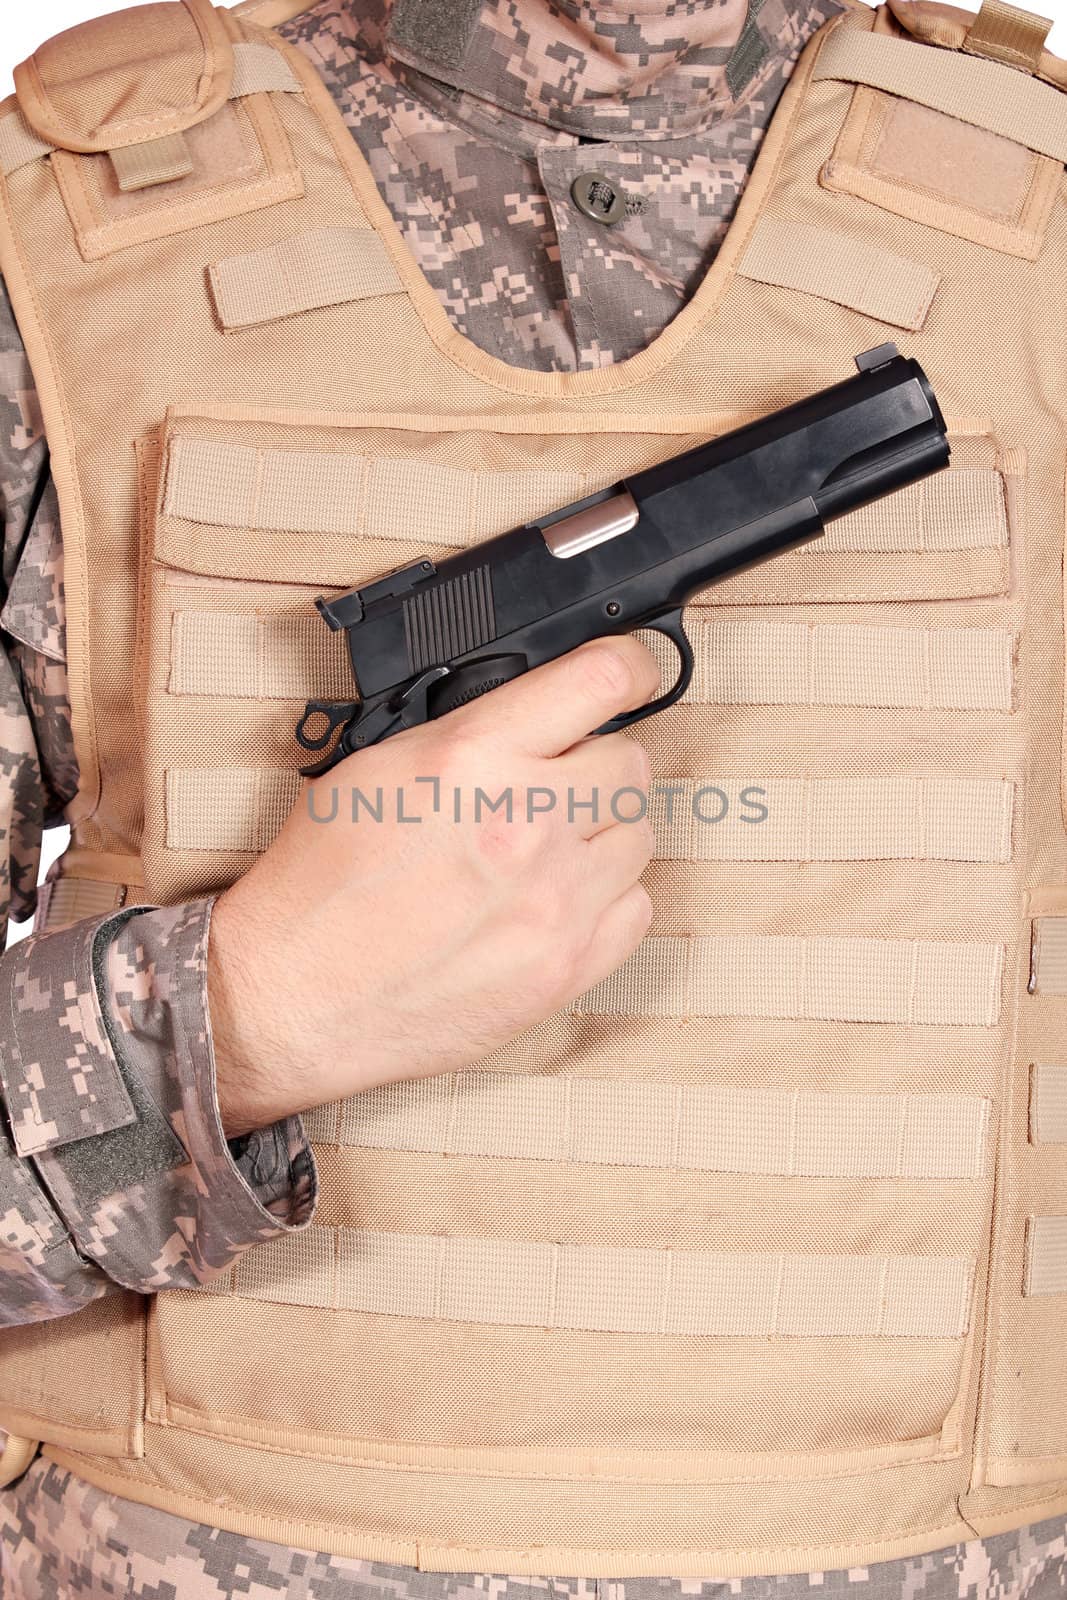 gun and bulletproof vest by goce